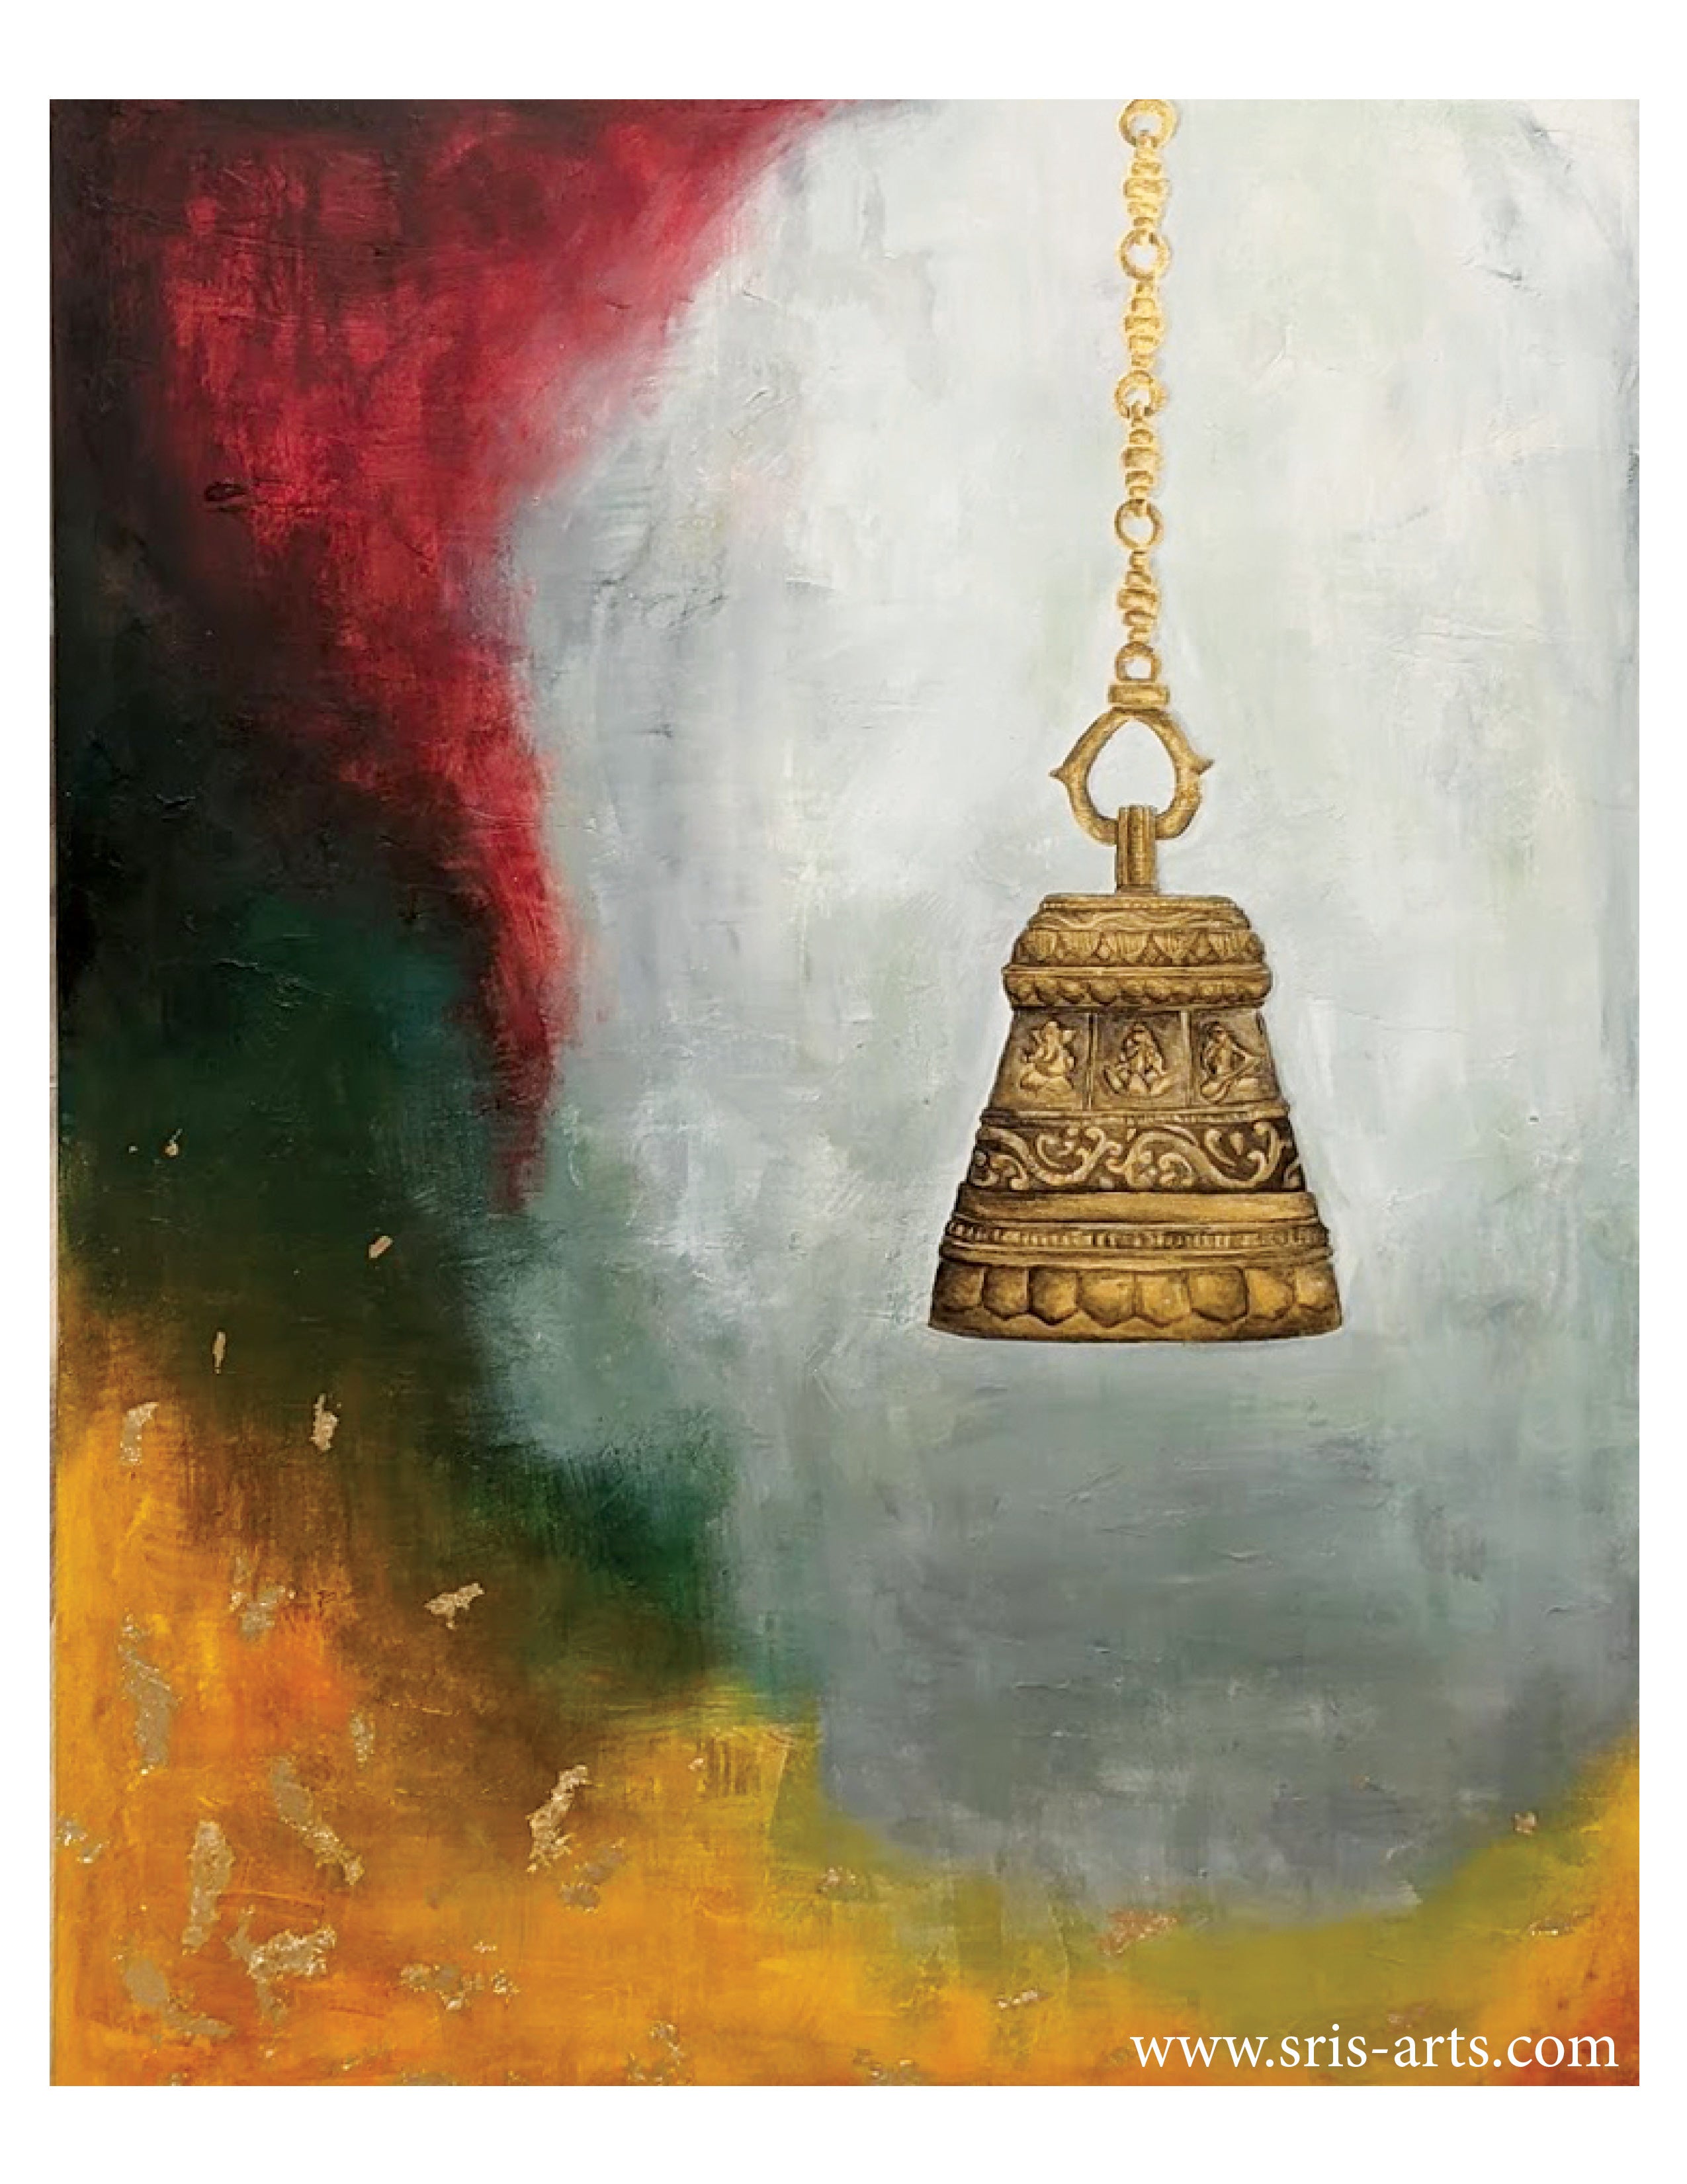 Prayer Bell Print by Sri's Arts